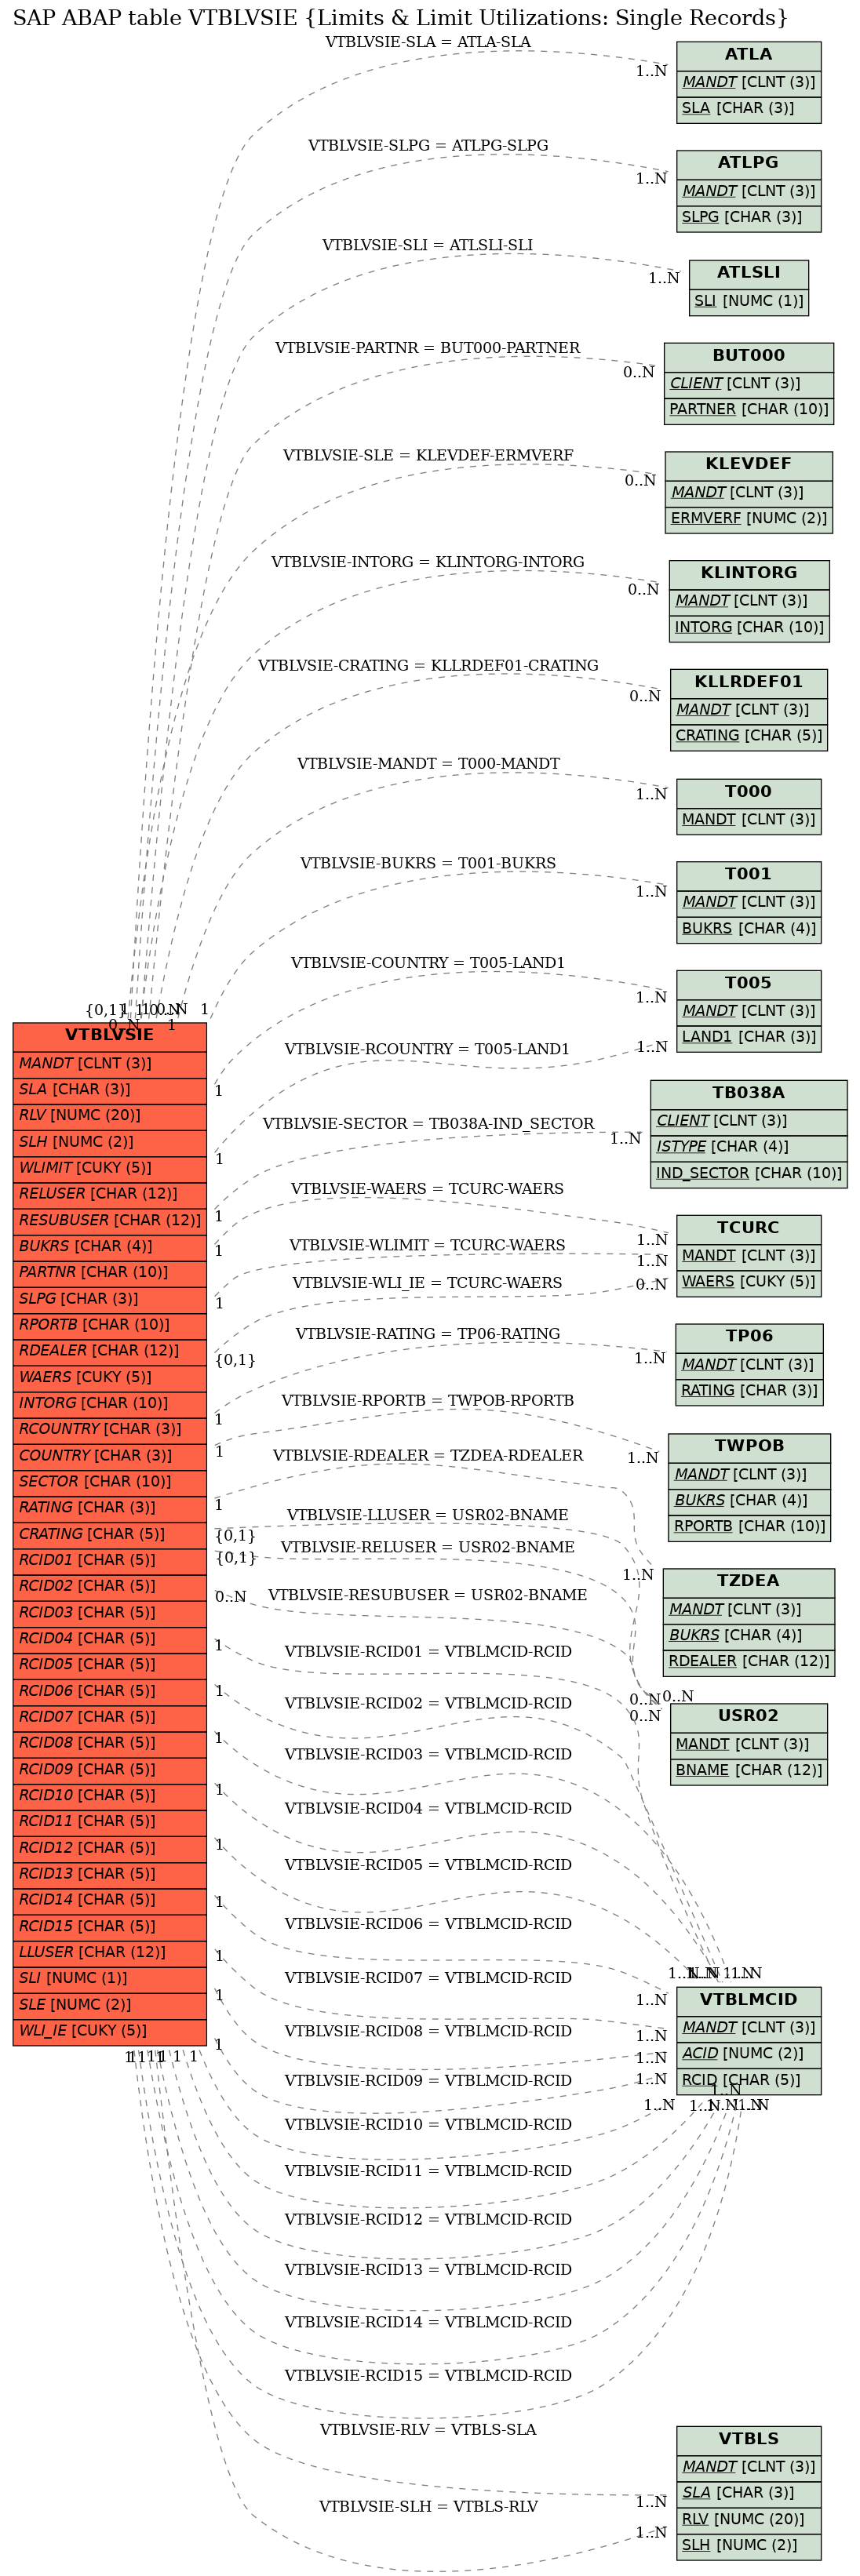 E-R Diagram for table VTBLVSIE (Limits & Limit Utilizations: Single Records)